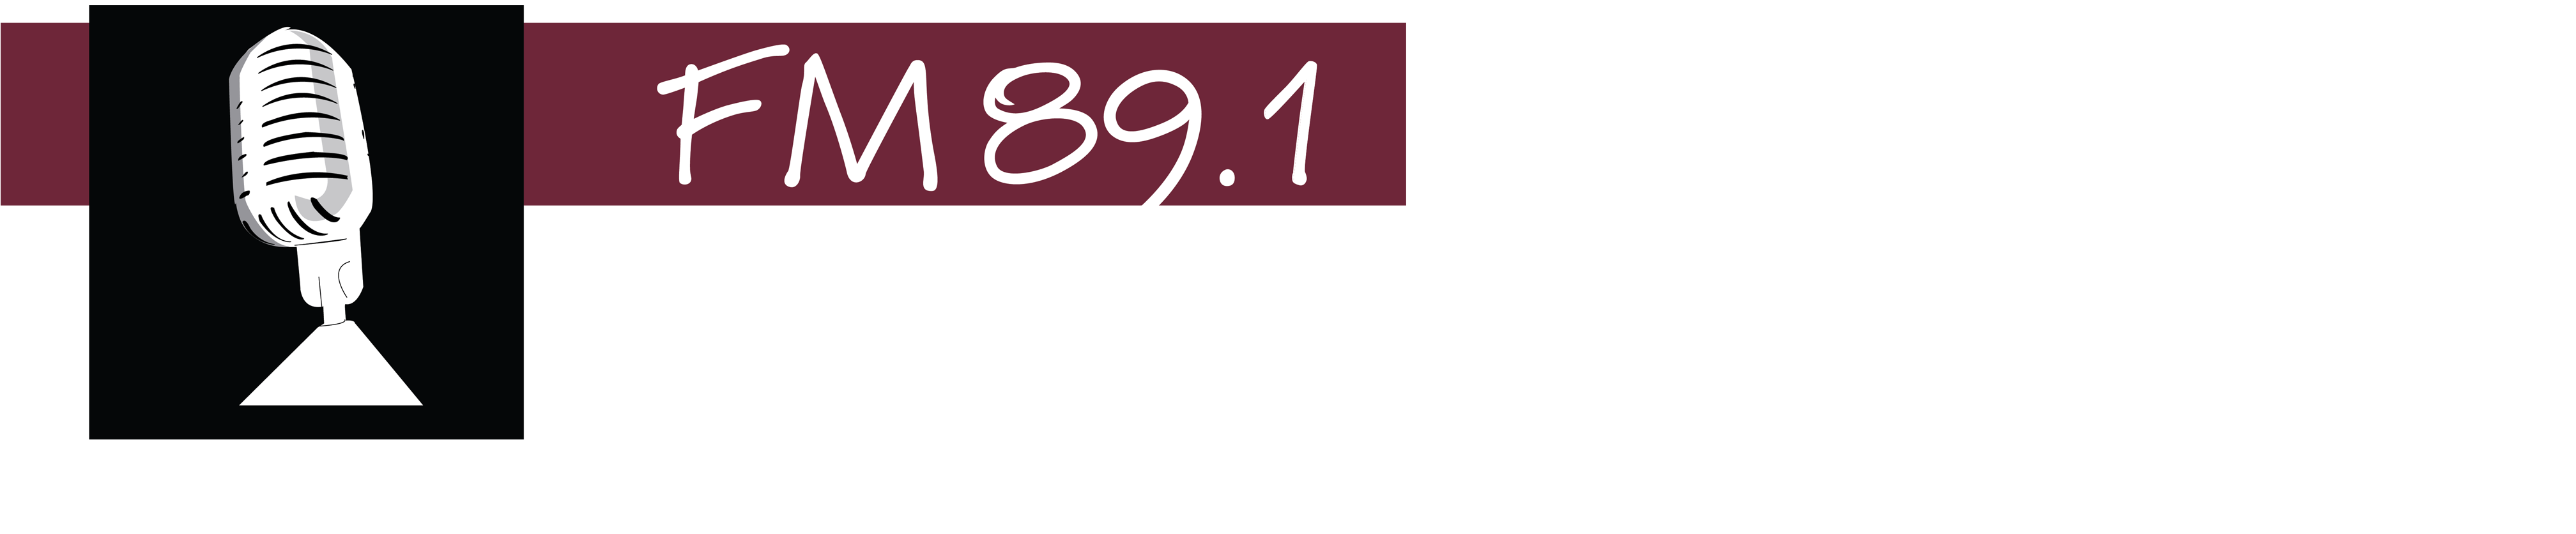 Kuar Logo - P. Allen Smith (4031x1246)